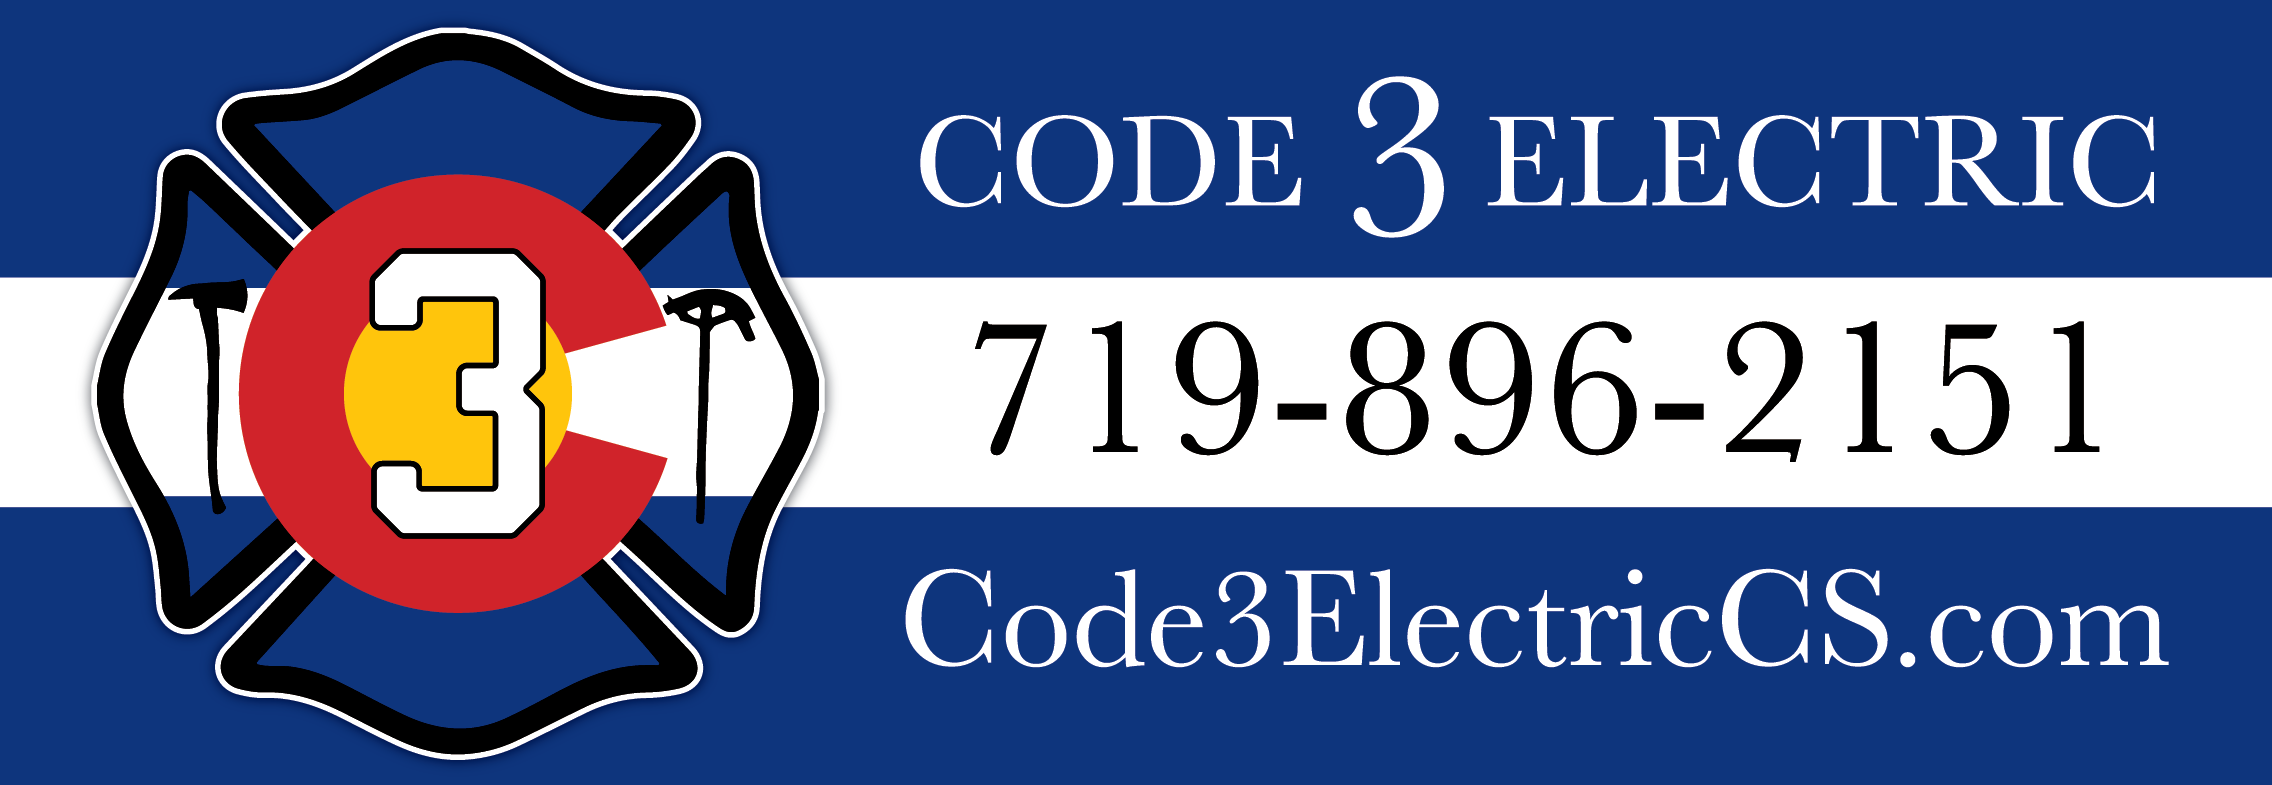 Code 3 Electric, Inc.